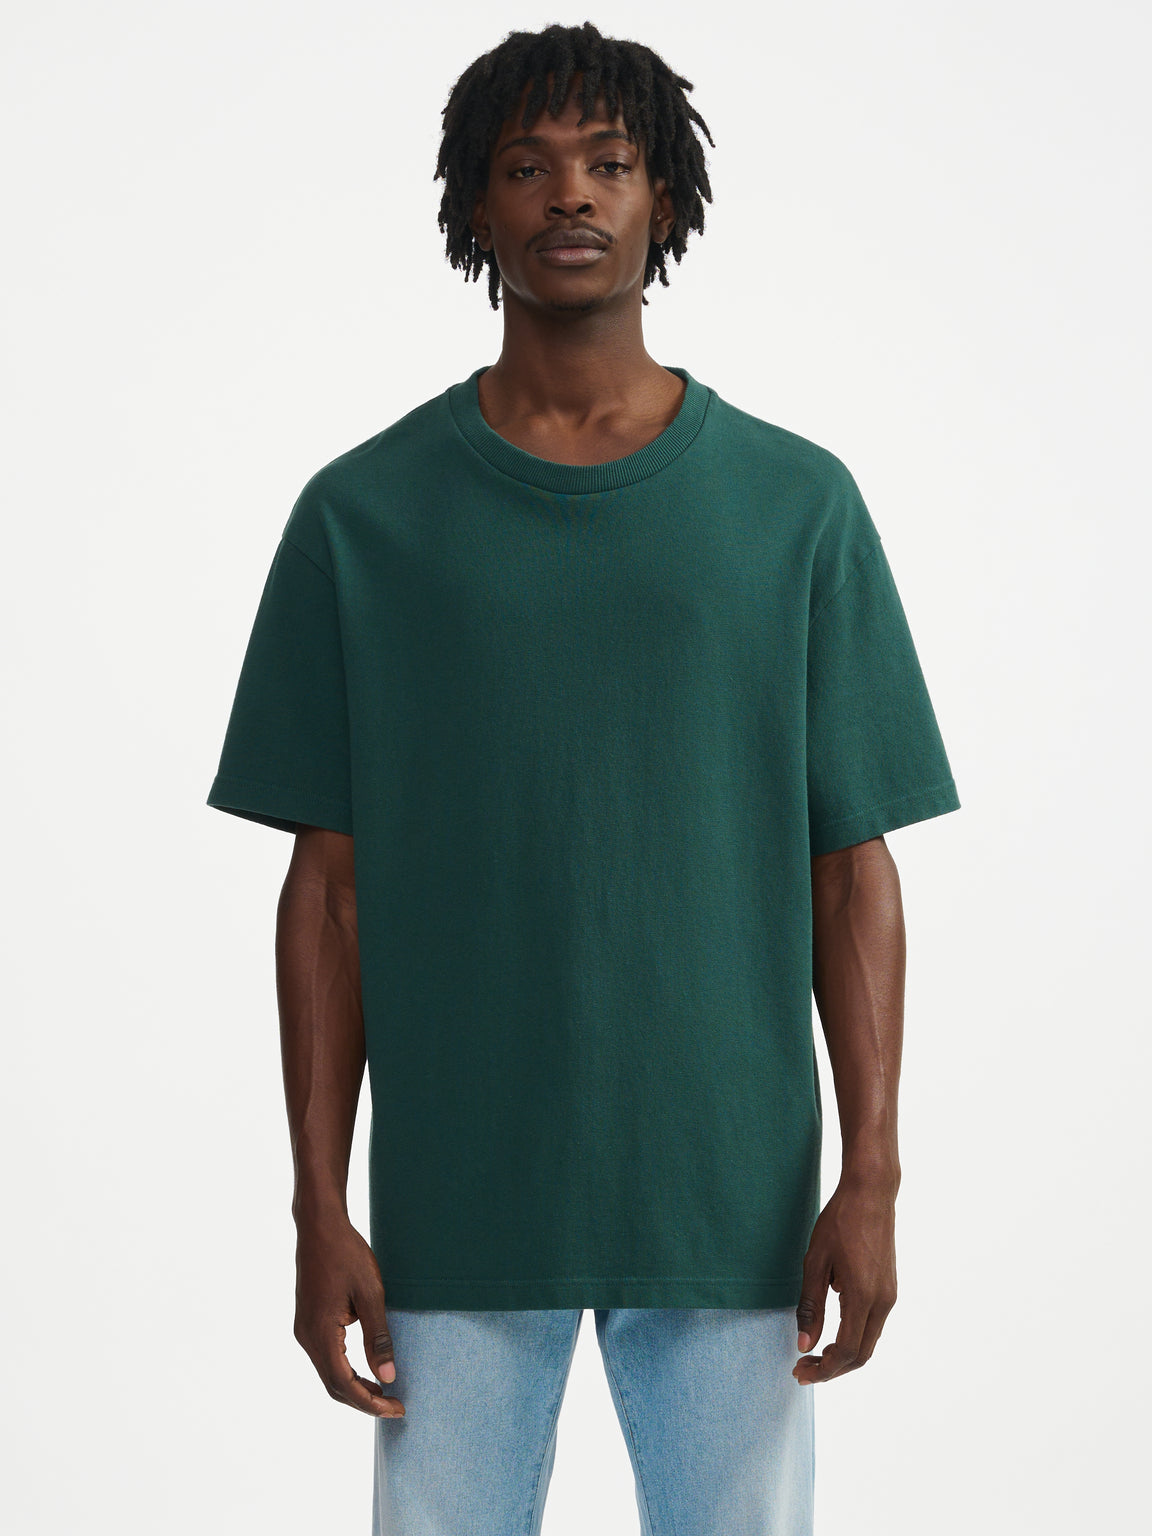 Vlugs T-shirt - Groen | Mannencollectie | Bellerose